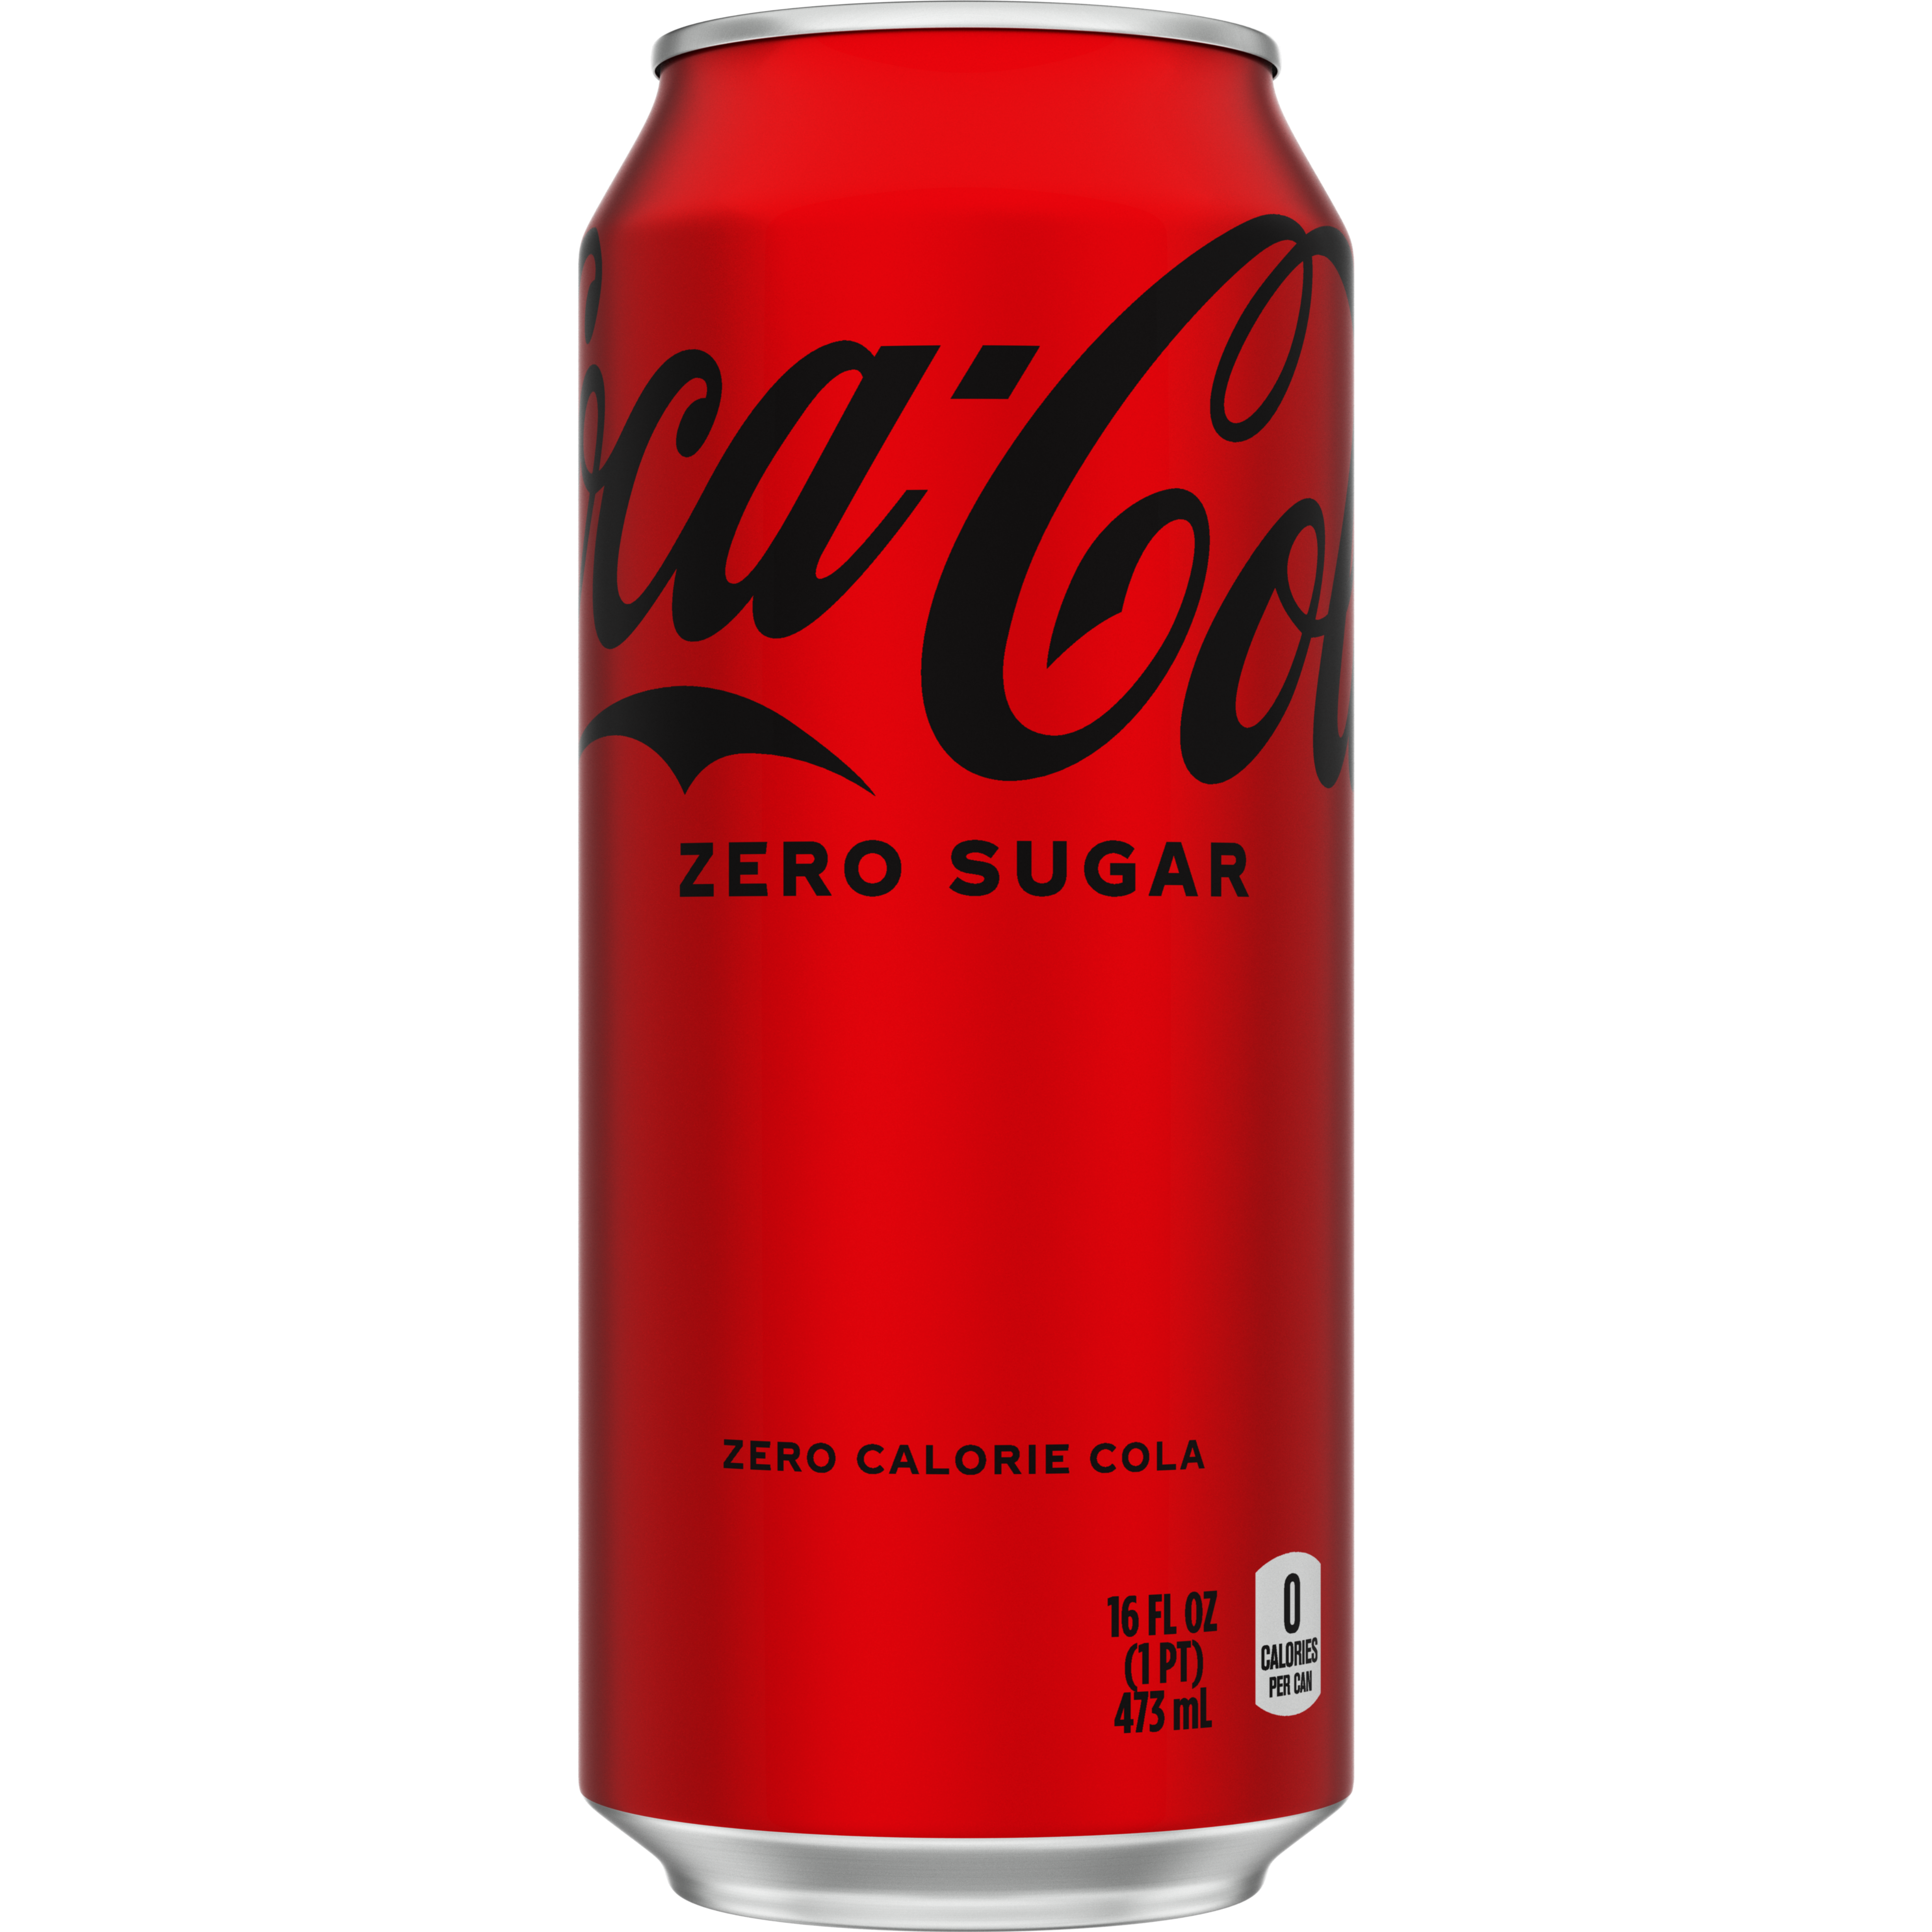 https://us.coca-cola.com/content/dam/nagbrands/us/coke/en/value-collection/coca-cola-zero-sugar-16-oz-can.png